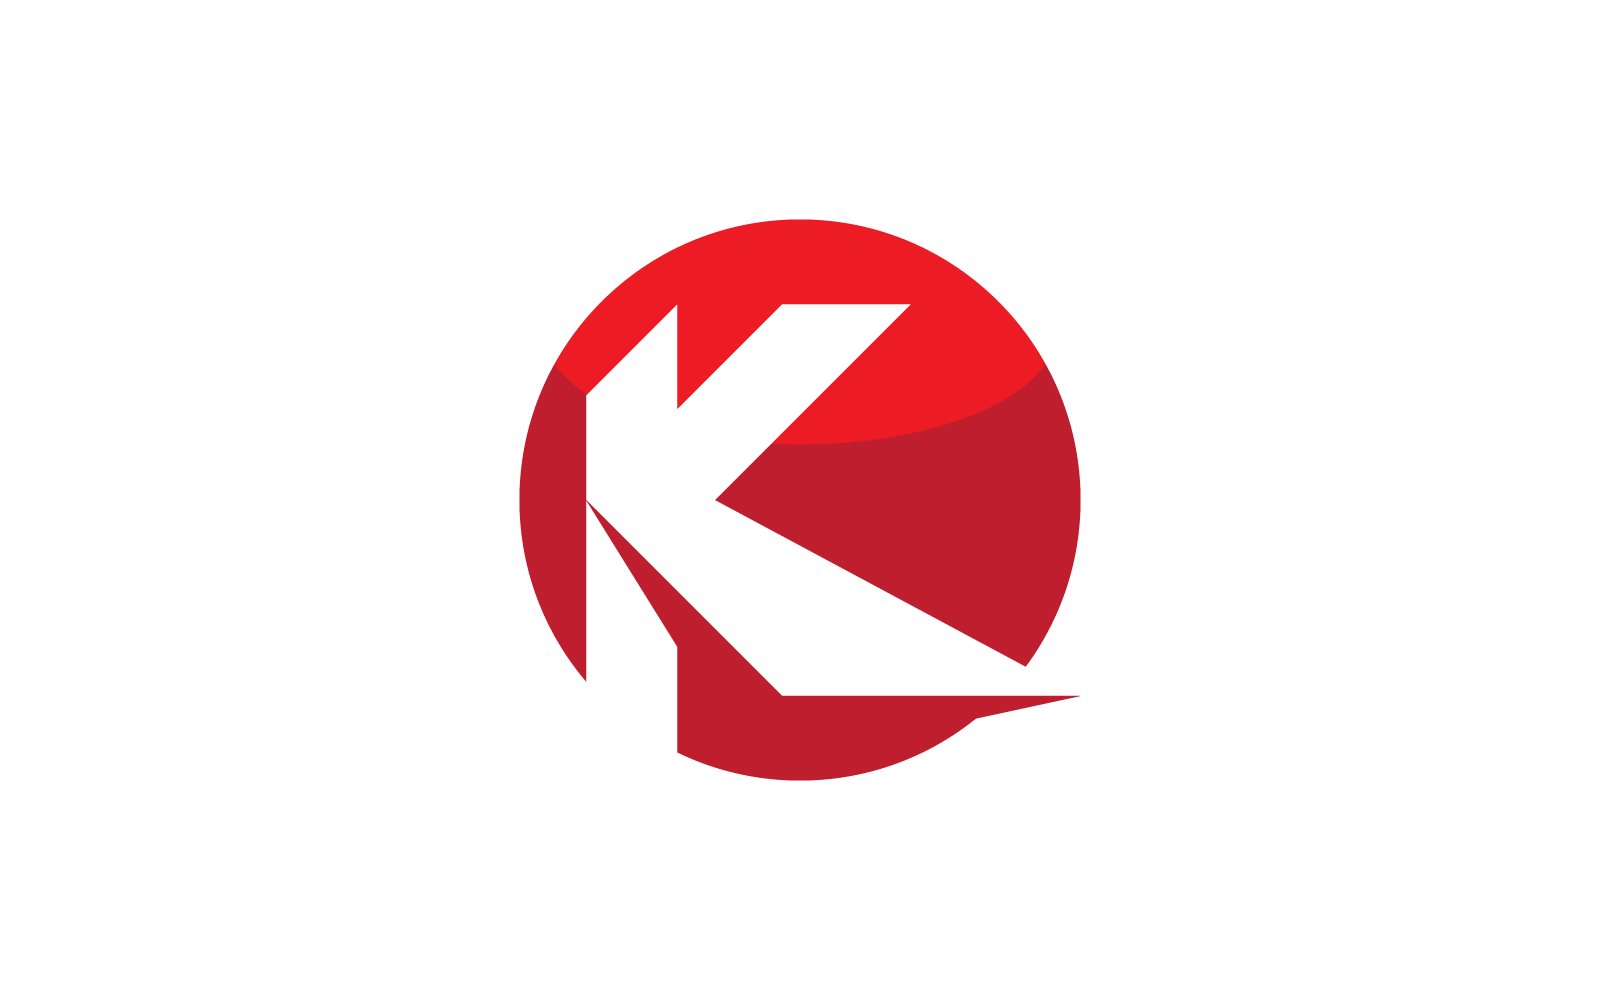 K initial letter logo vector illustration flat design Logo Template